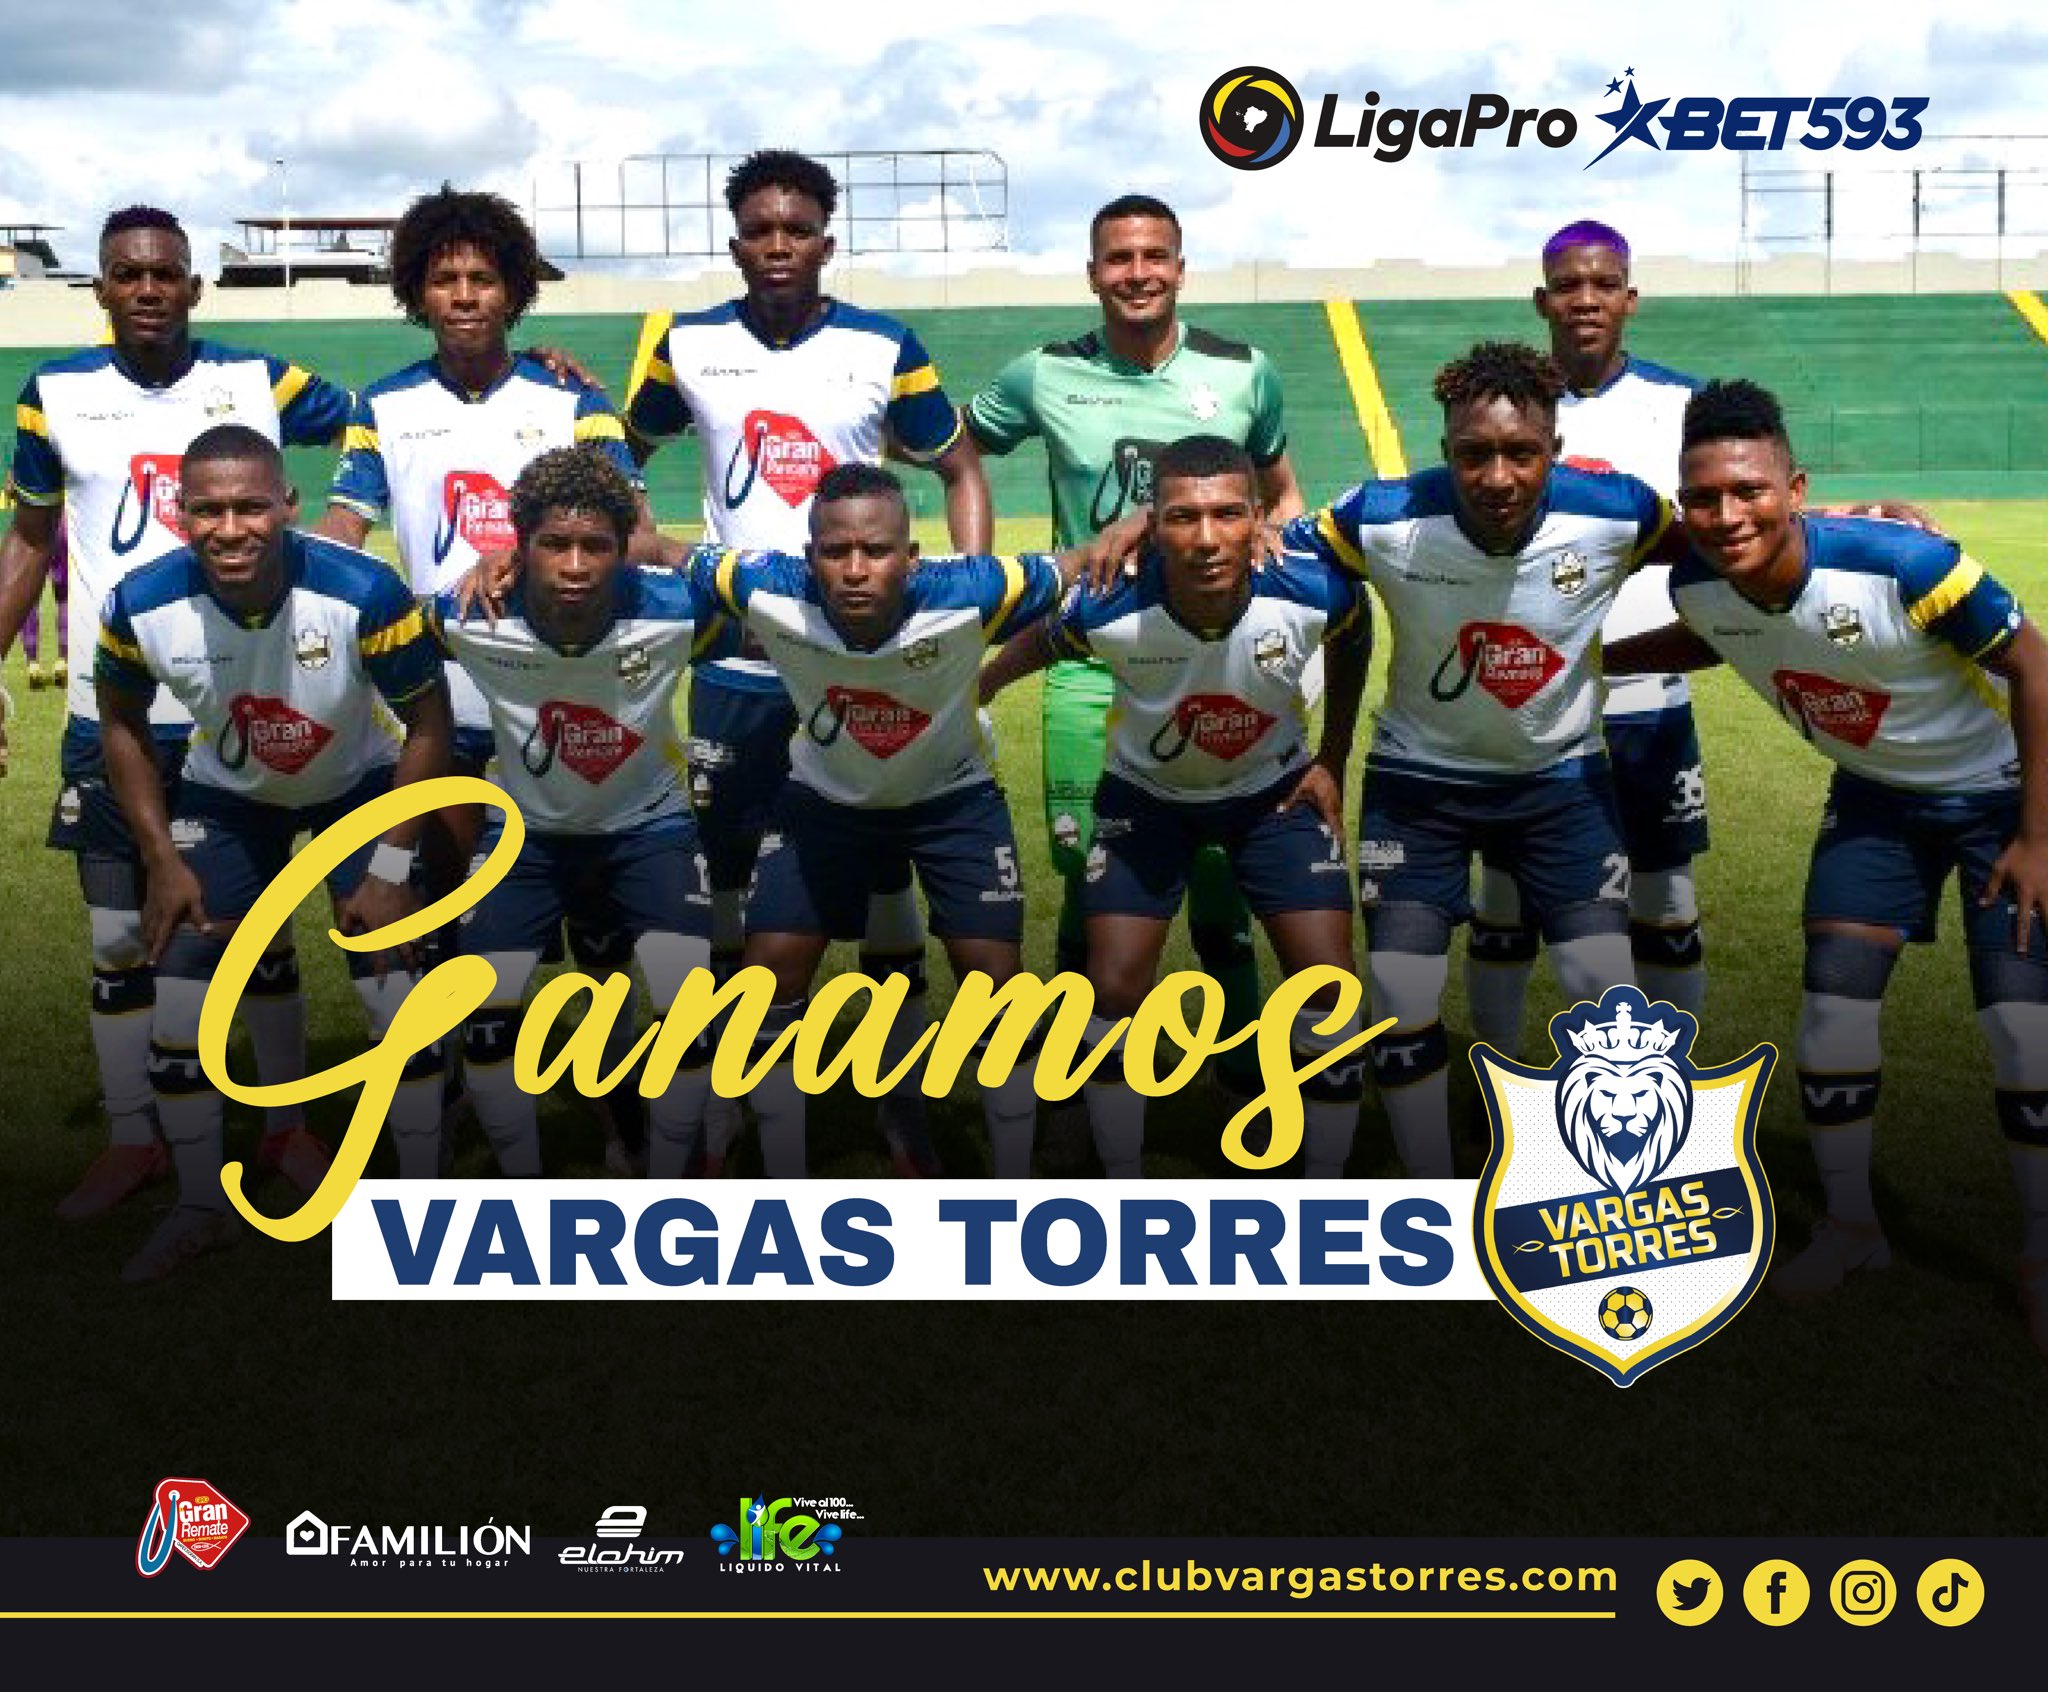 Histórico triunfo de Vargas Torres en la LigaPro serie B